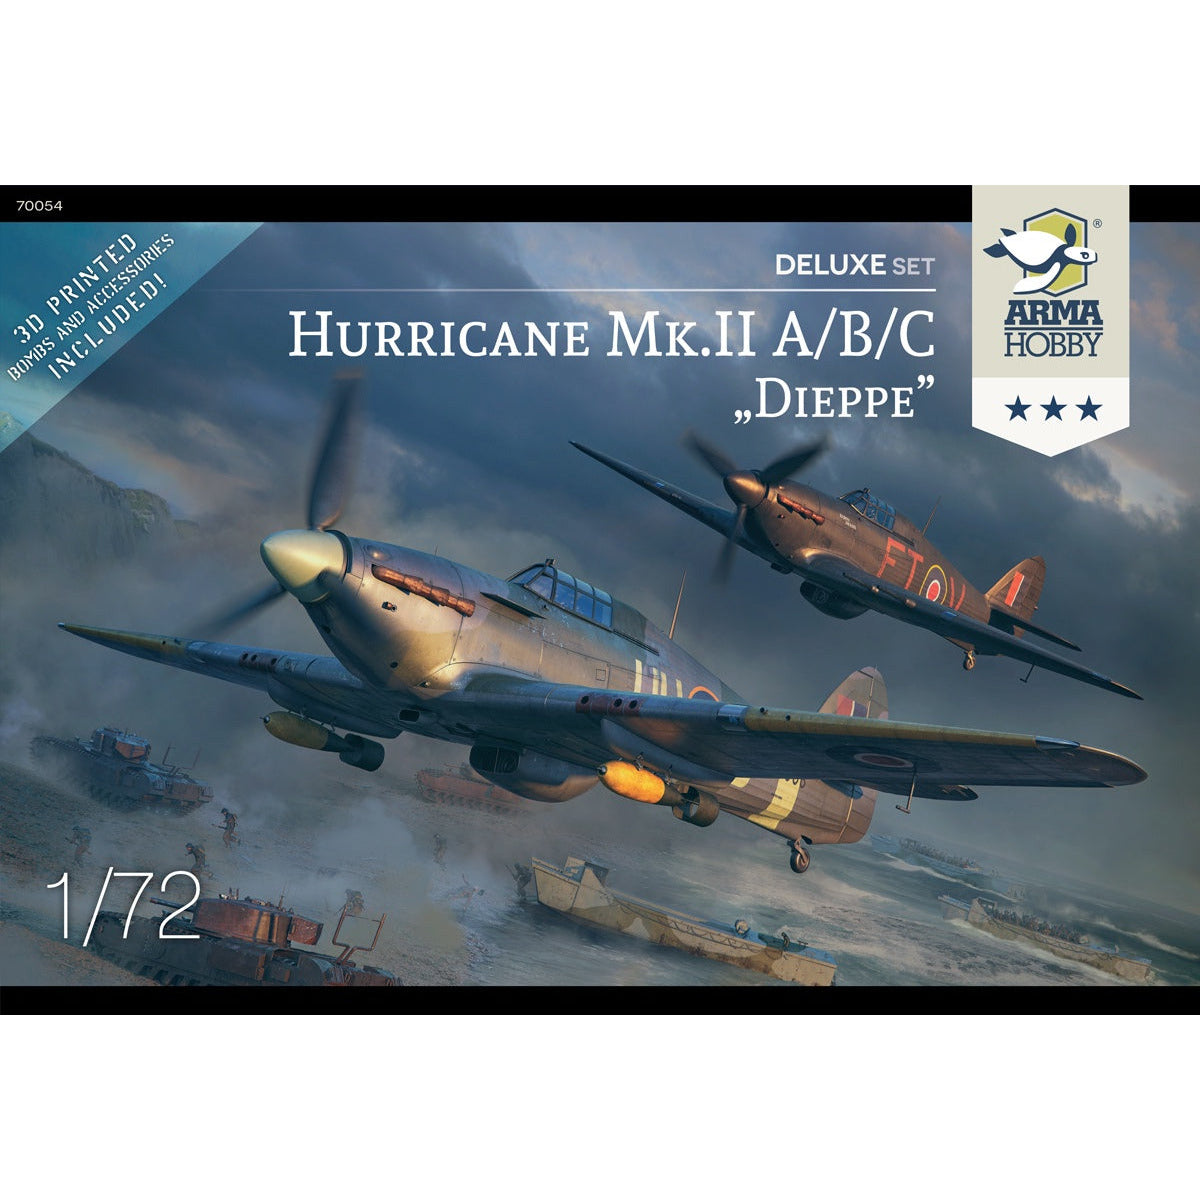 Hurricane Mk II a/b/c Dieppe Deluxe Set 1/72 #70054 by Arma Hobby